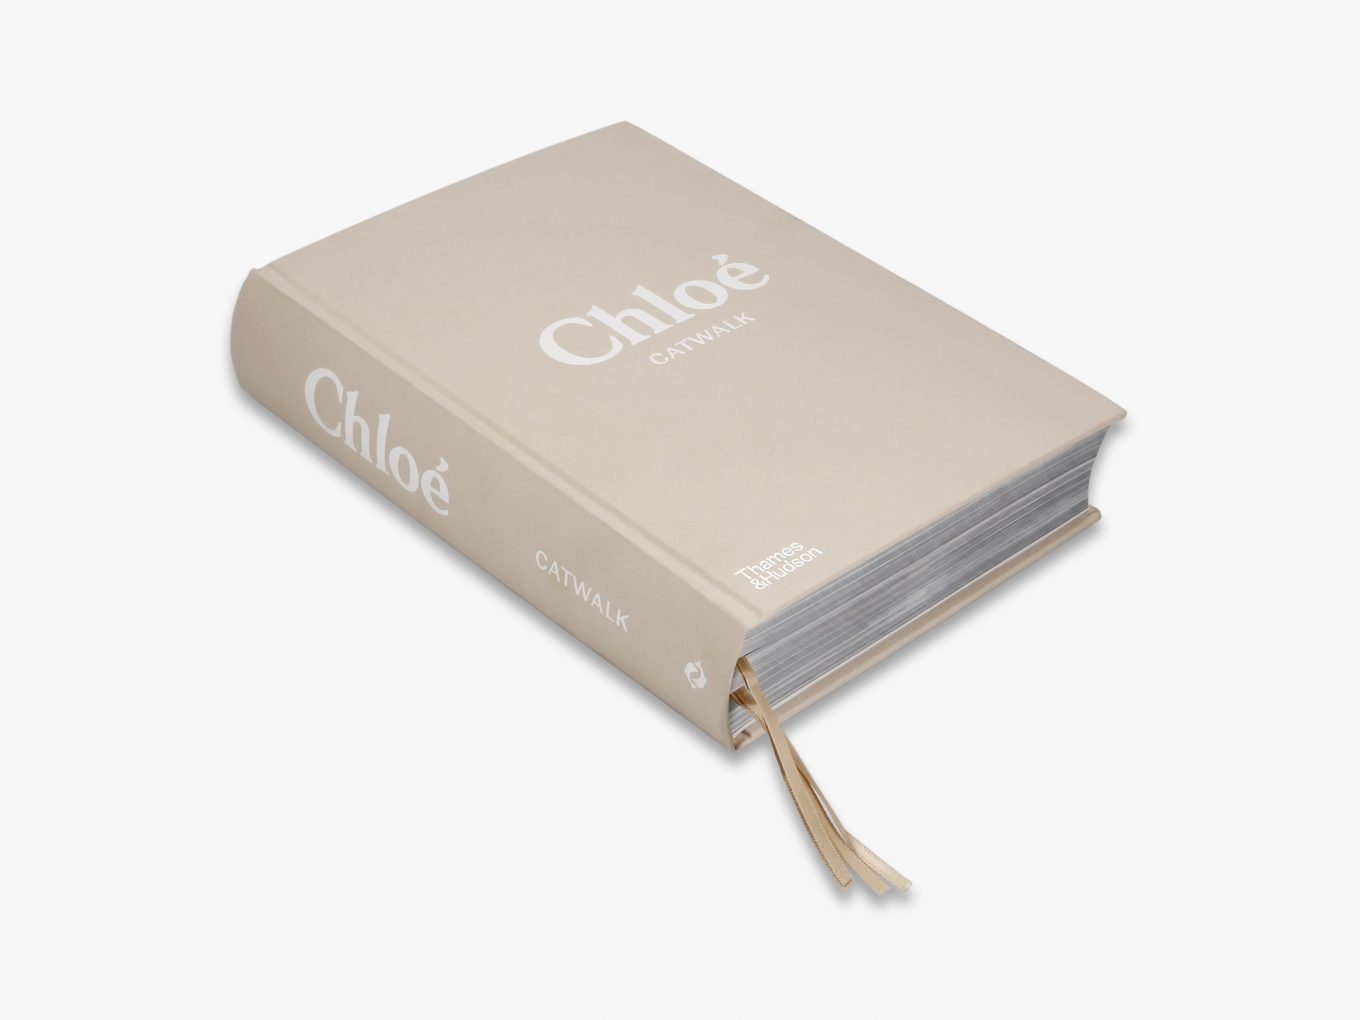 Chloé Chloé Catwalk Book